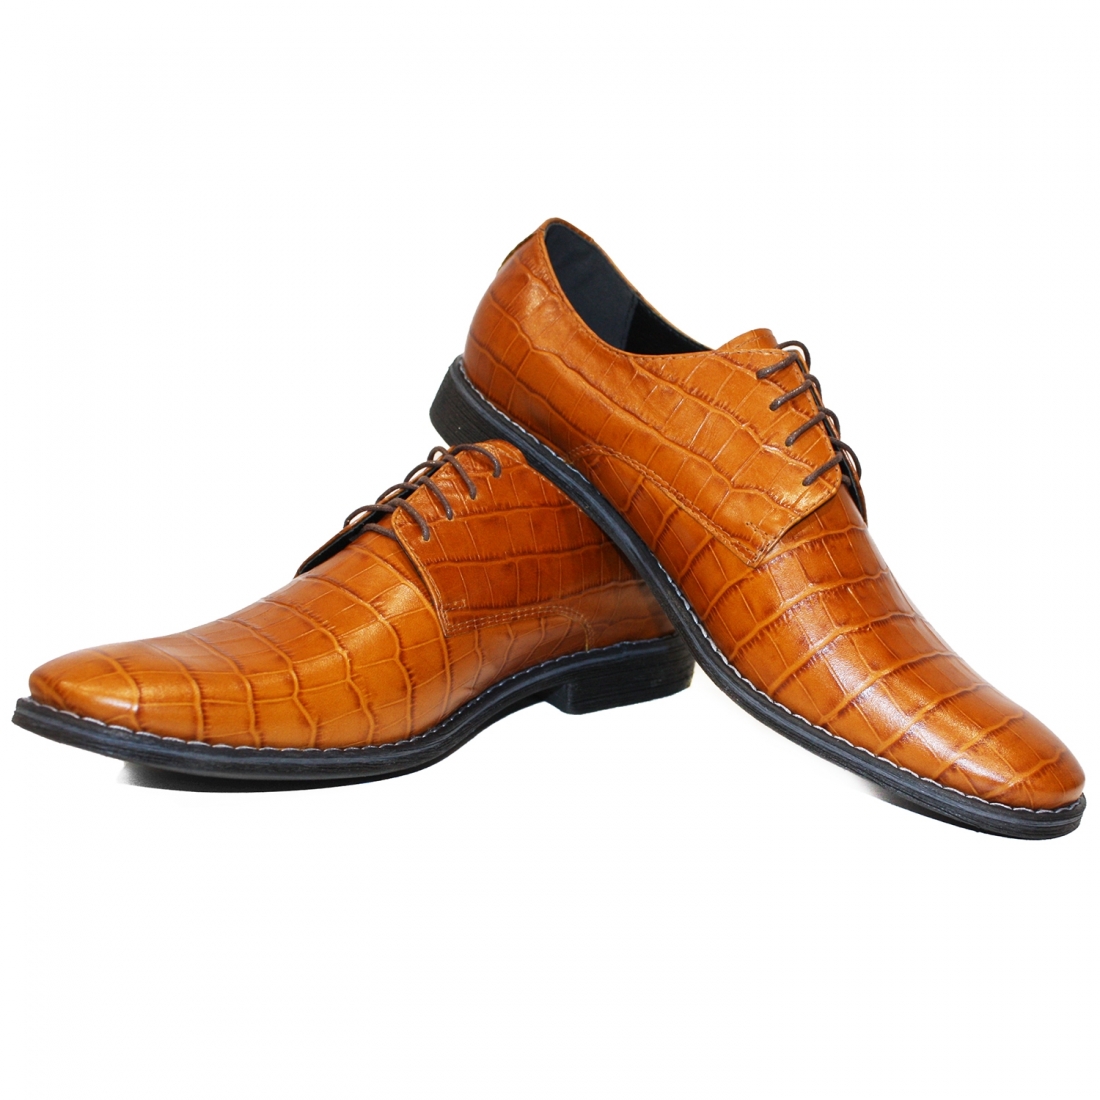 Modello Jutersho - Chaussure Classique - Handmade Colorful Italian Leather Shoes